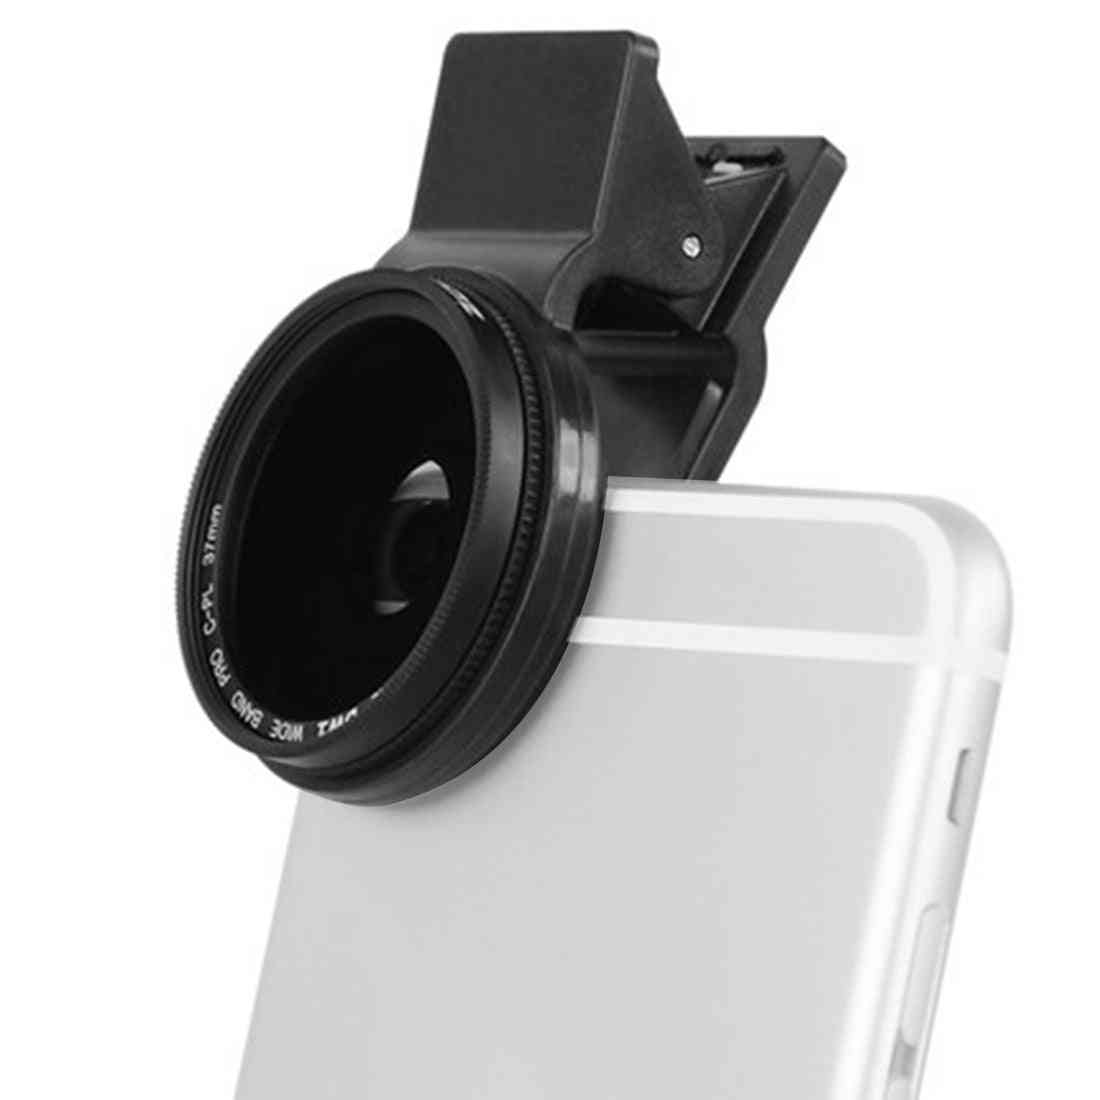 37mm-professional phone-camera circular-polarizer cpl-lens para iphone 7 6s plus samsung galaxy huawei htc windows android (37mm)